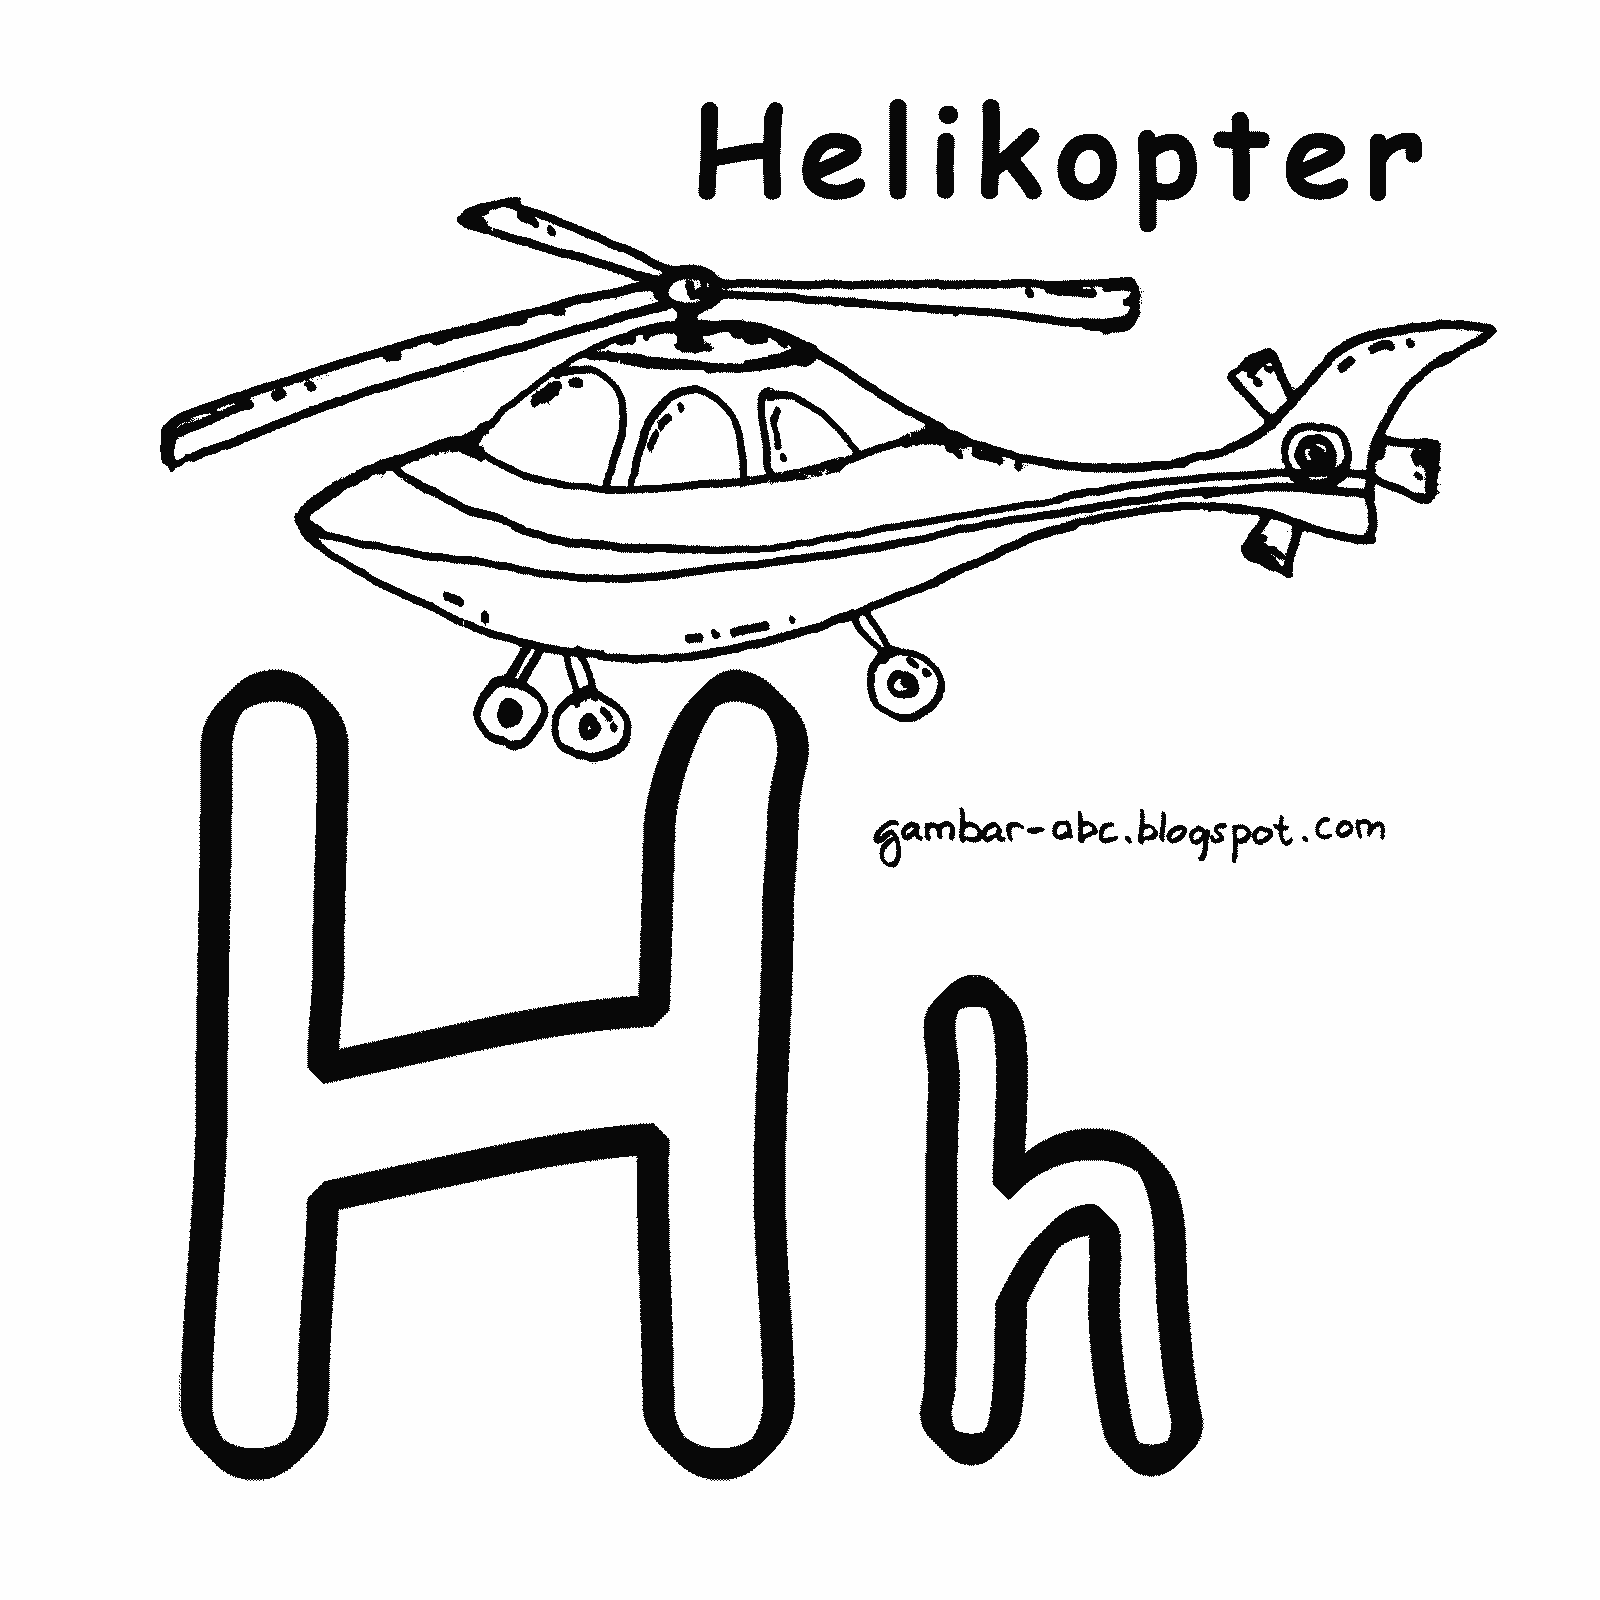 Mewarnai Huruf "H" Gambar Helikopter - Contoh Gambar Mewarnai